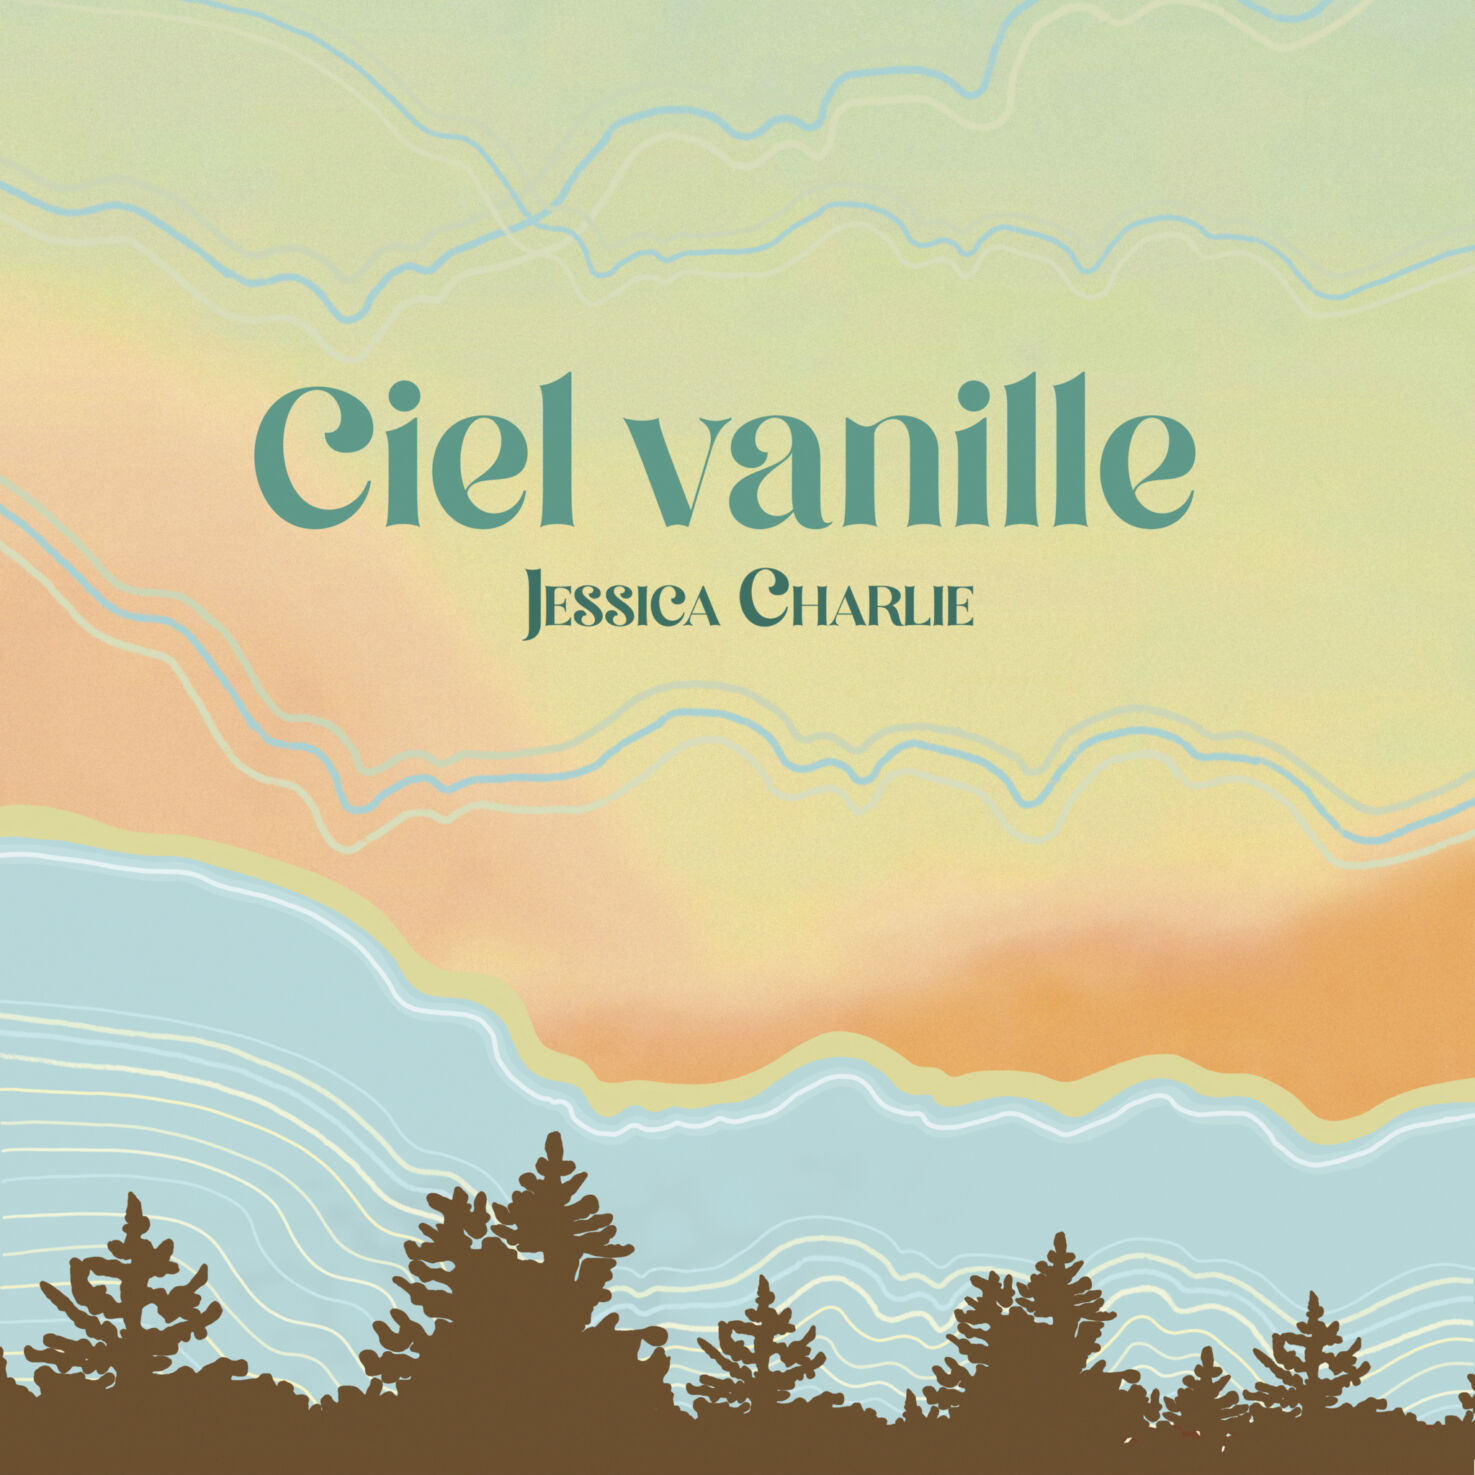 Jessica Charlie/Ciel vanille